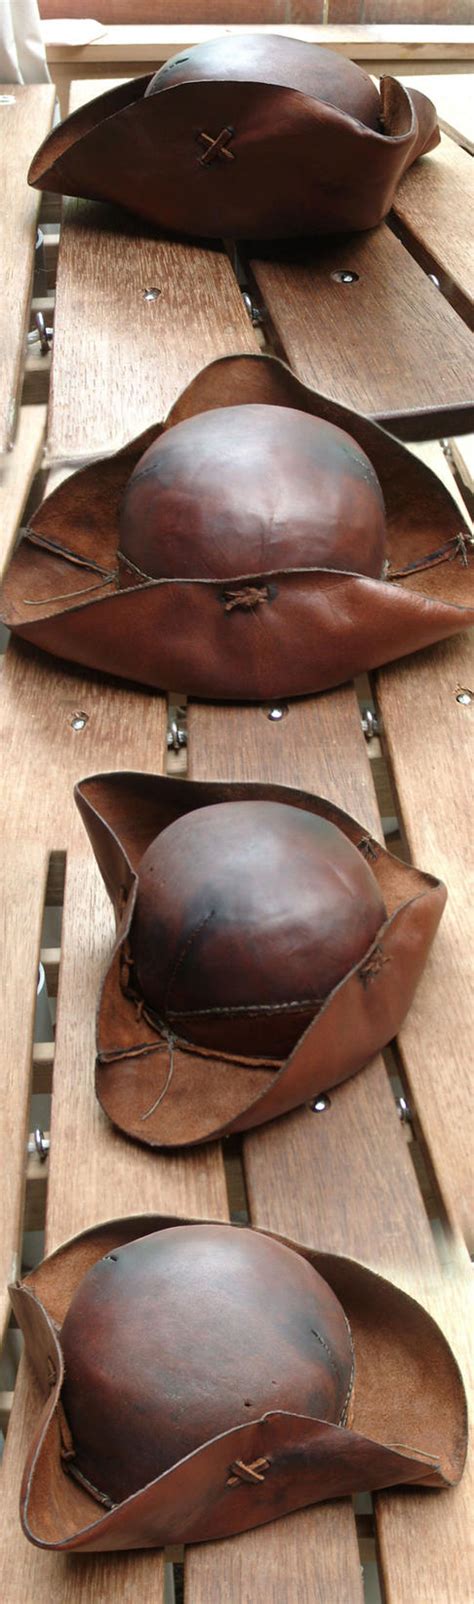 1st Leather Tricorn Hat By Tobias Lockhart On Deviantart